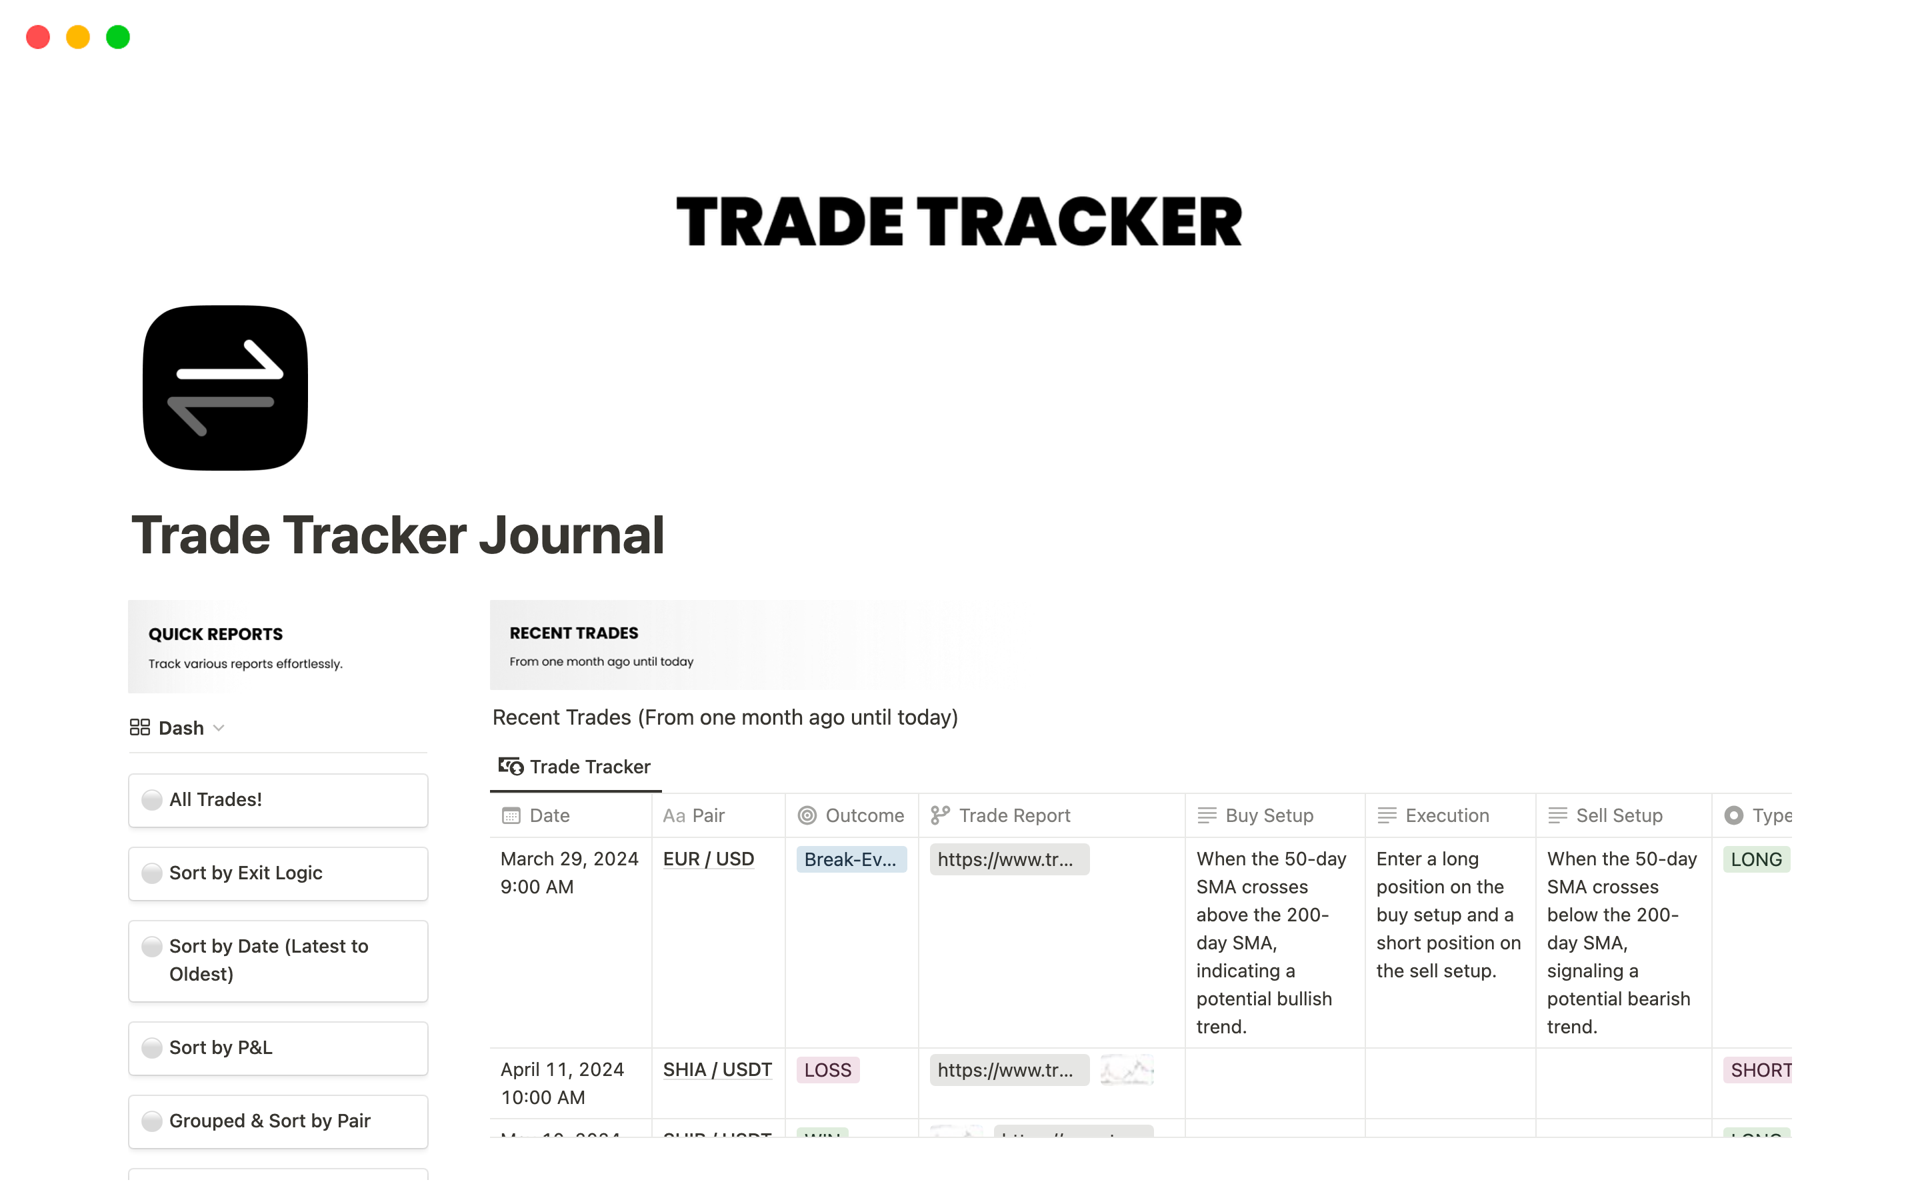 Aperçu du modèle de Trade Tracker Journal (Trading)